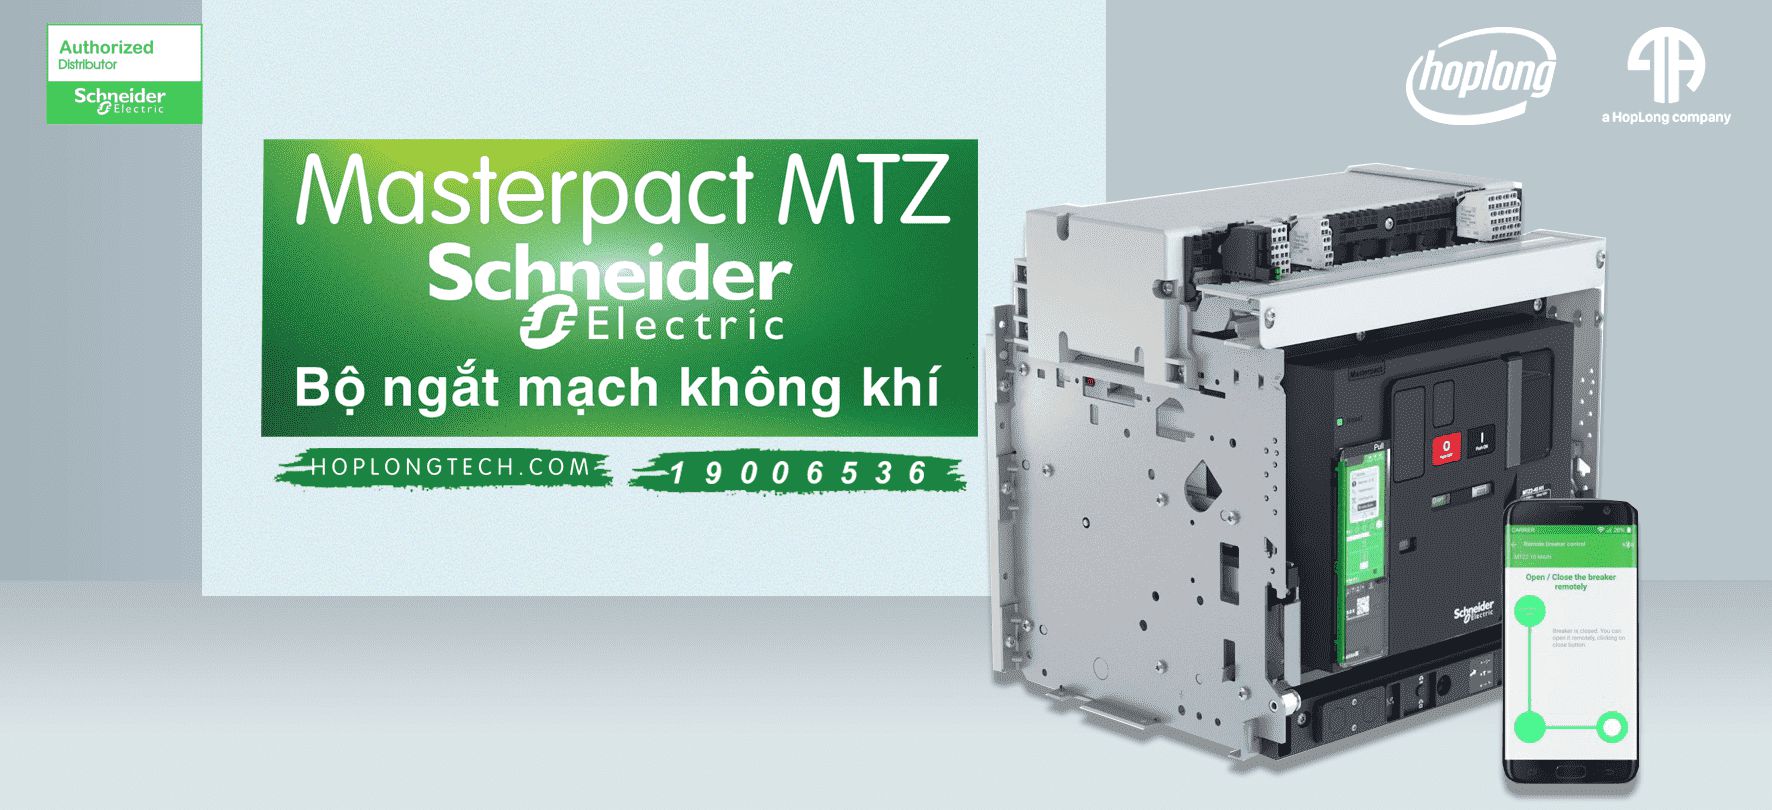 [Schneider – Giới Thiệu] Bộ ngắt mạch không khí Masterpact MTZ Schneider